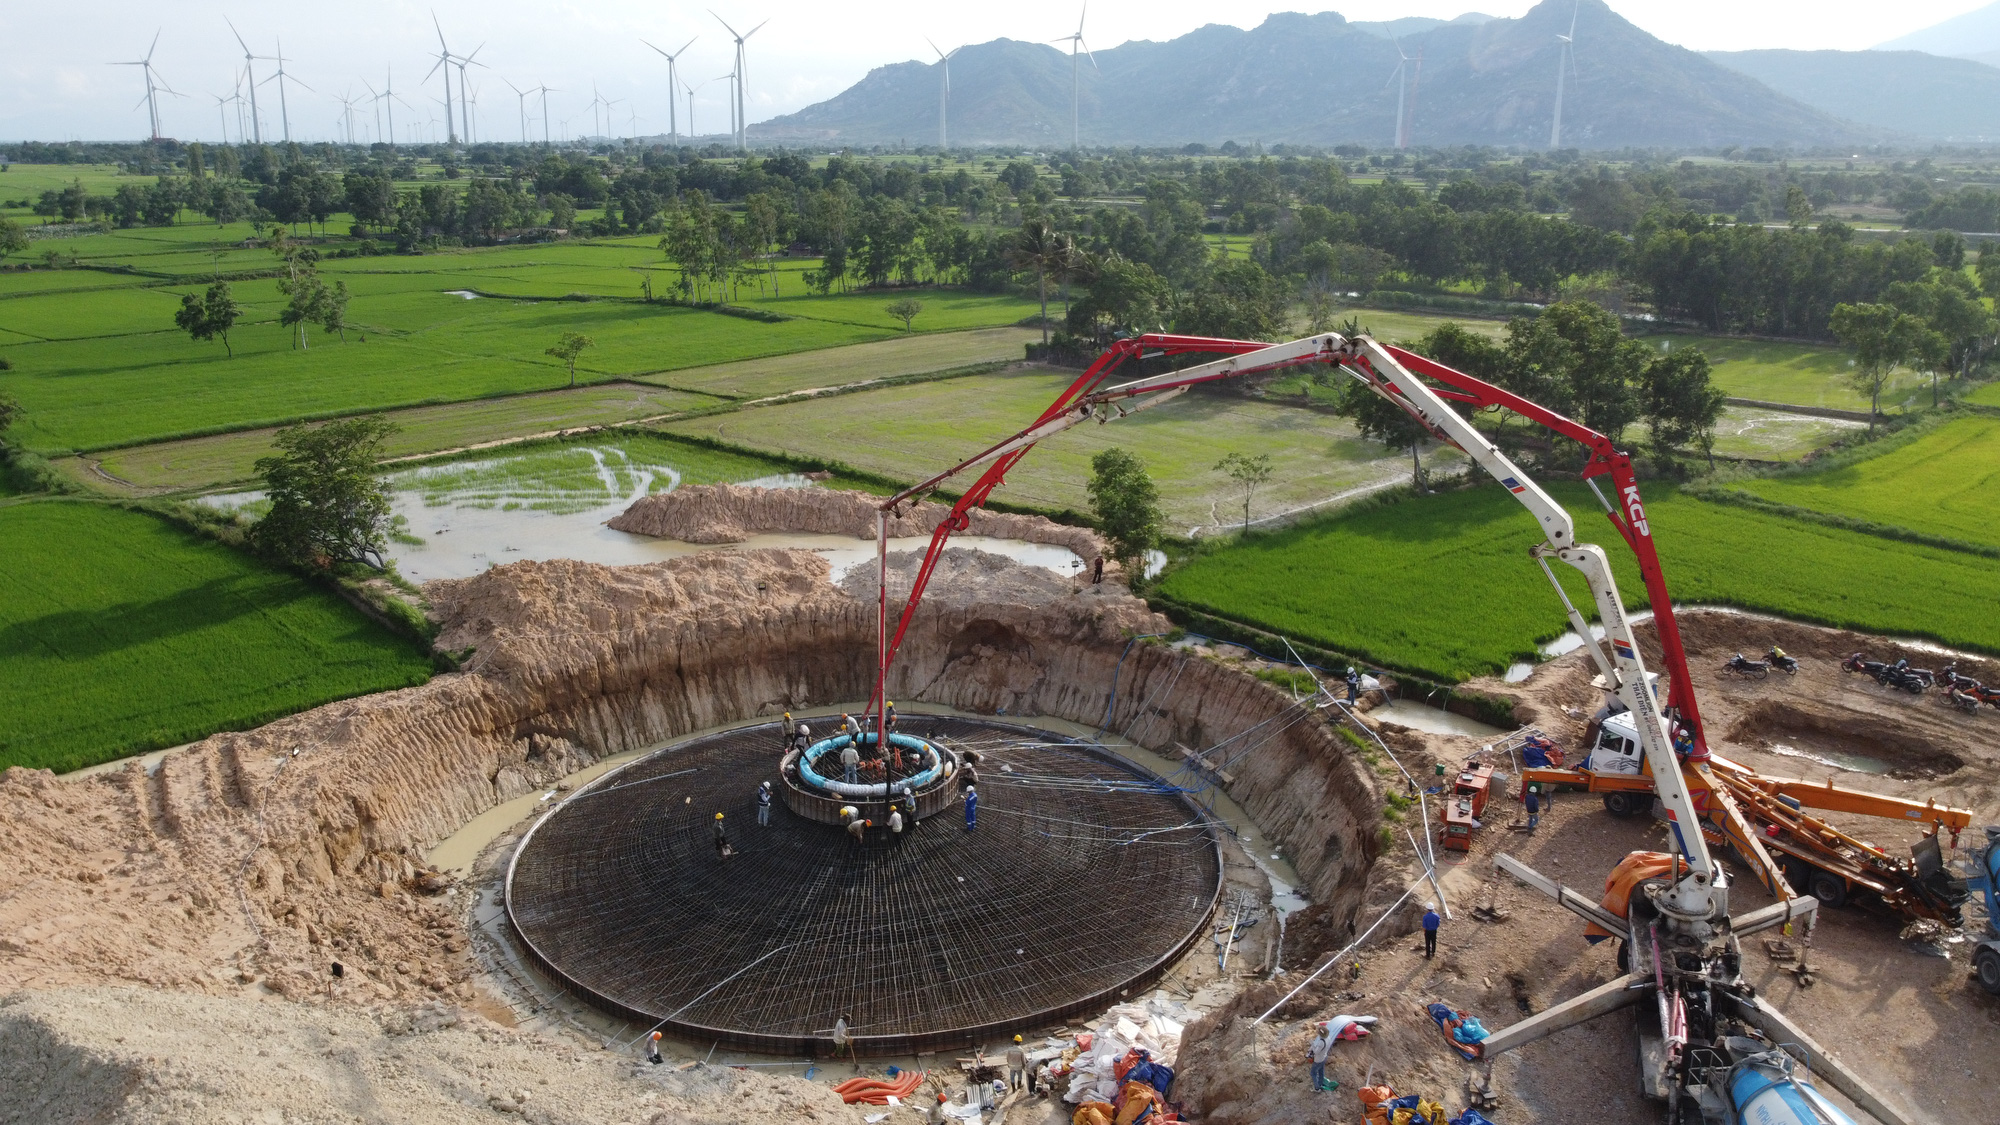 ADB provides $116mn loan to develop wind farms in Vietnam